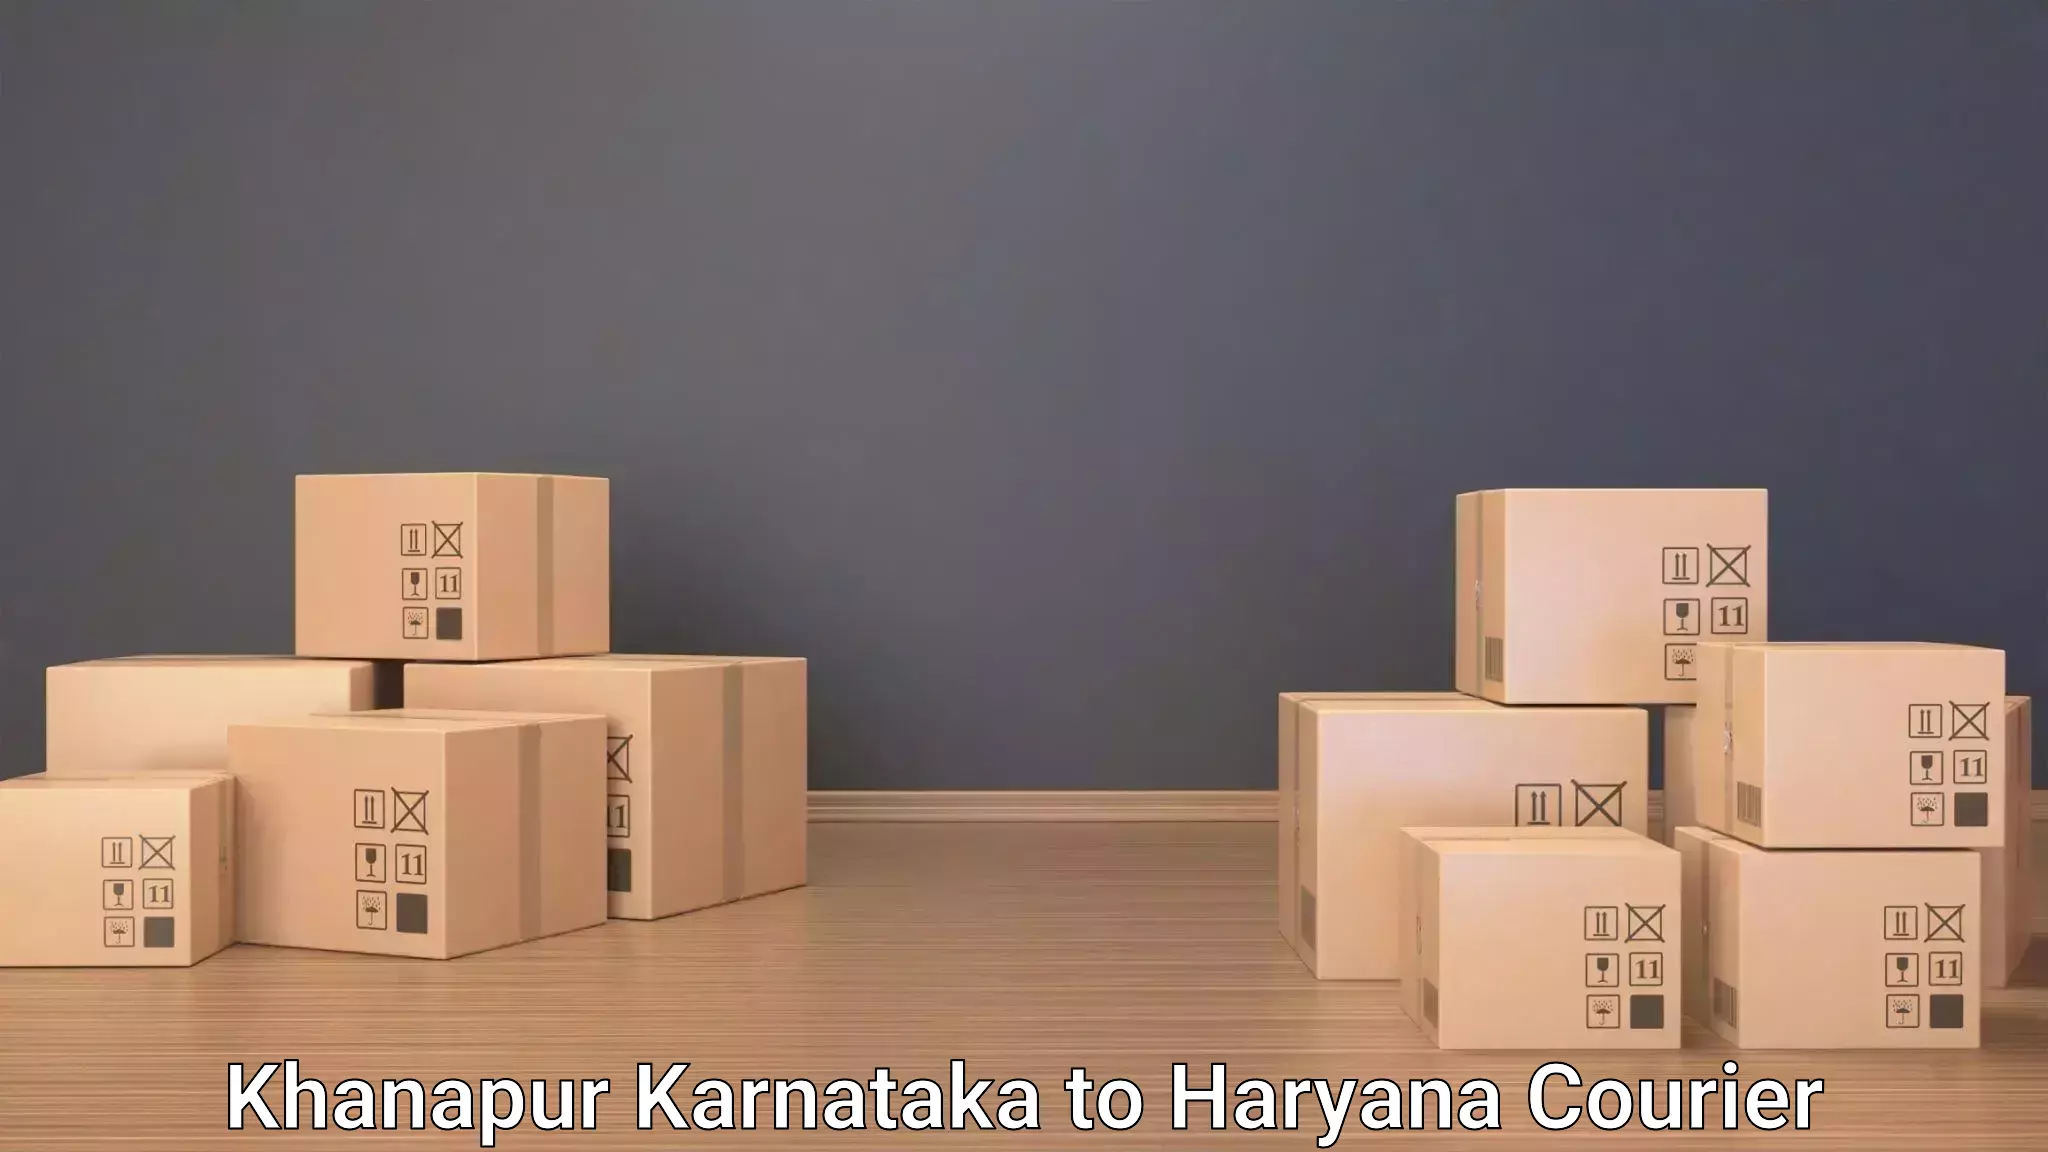 Baggage transport innovation Khanapur Karnataka to Kurukshetra University